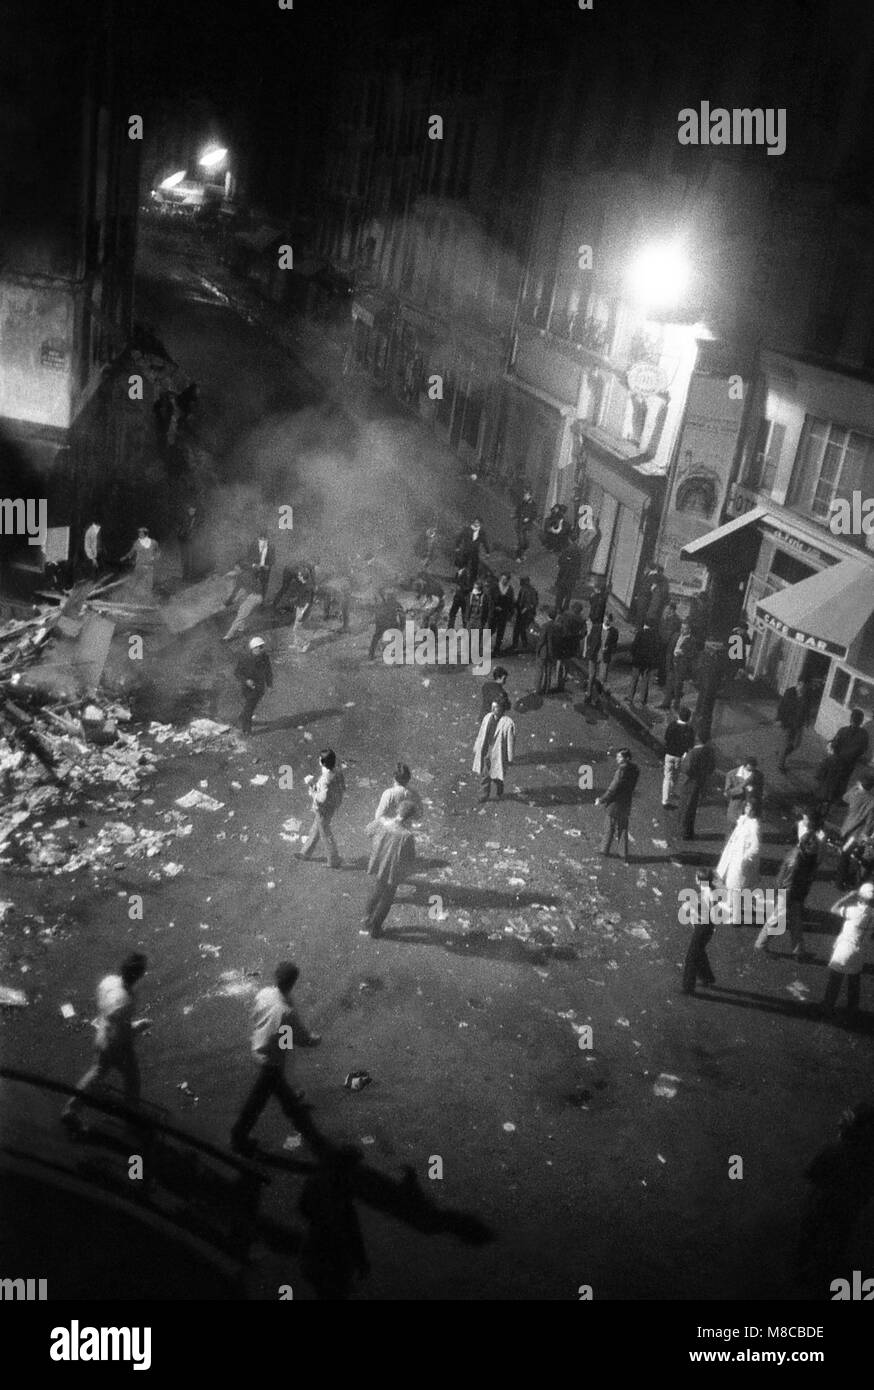 Philippe Gras / Le Pictorium -  May 68 -  1968  -  France / Ile-de-France (region) / Paris  -  Night gathering in the streets of Paris Stock Photo